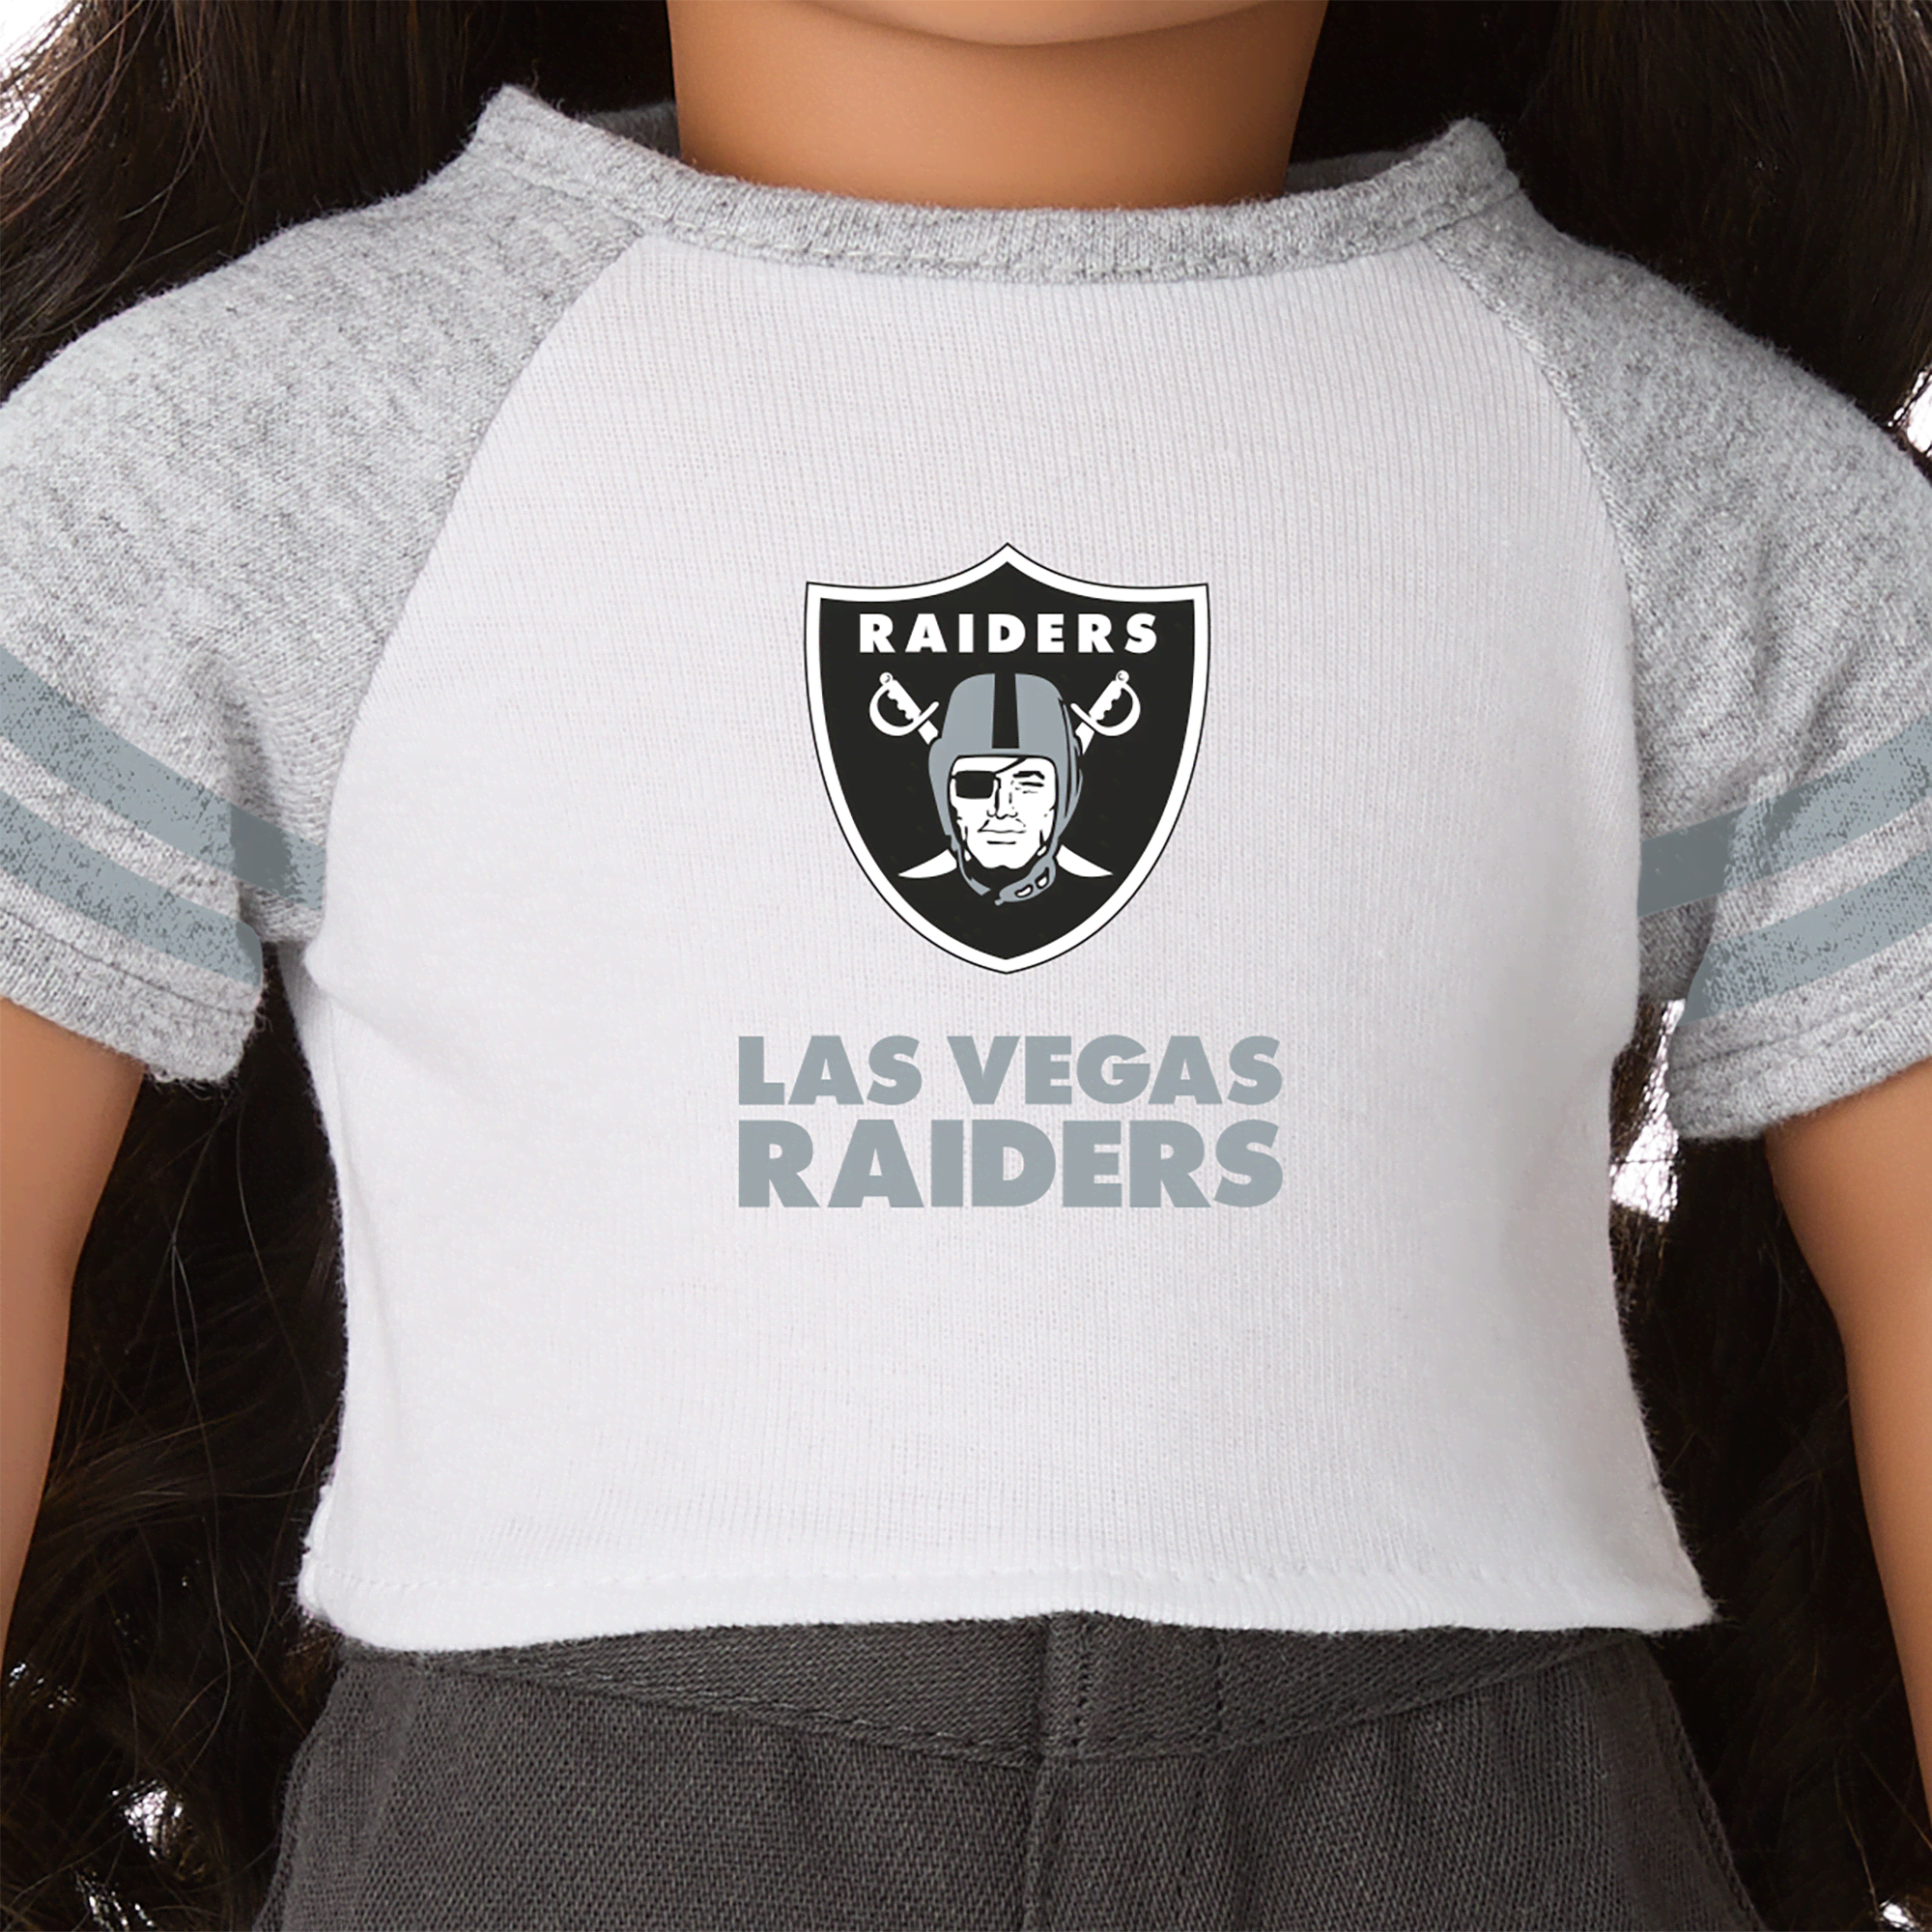 American Girl® x NFL Raiders Fan Tee for 18-inch Dolls